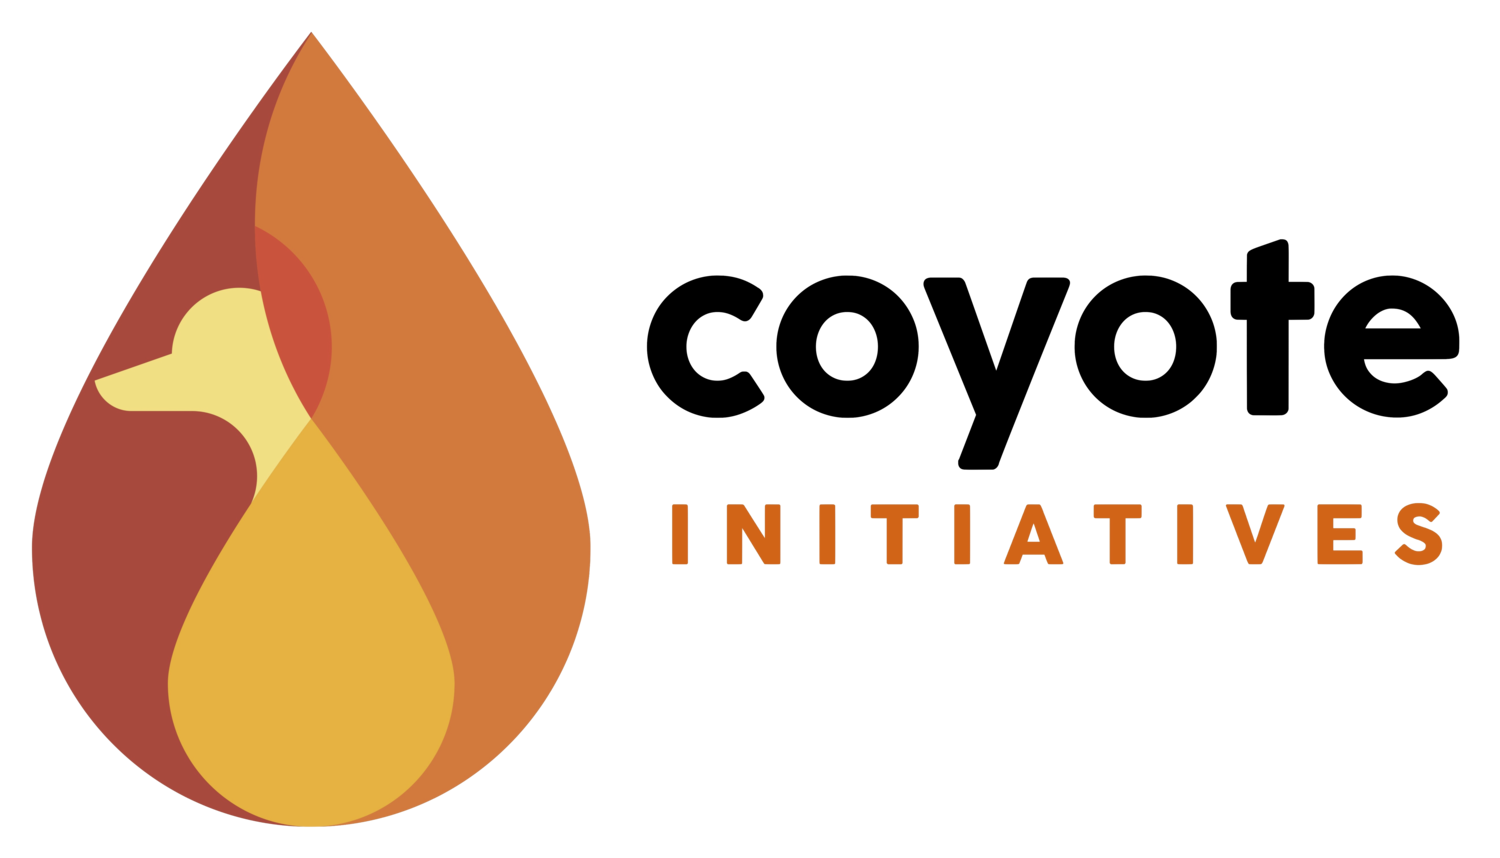 Coyote Initiatives